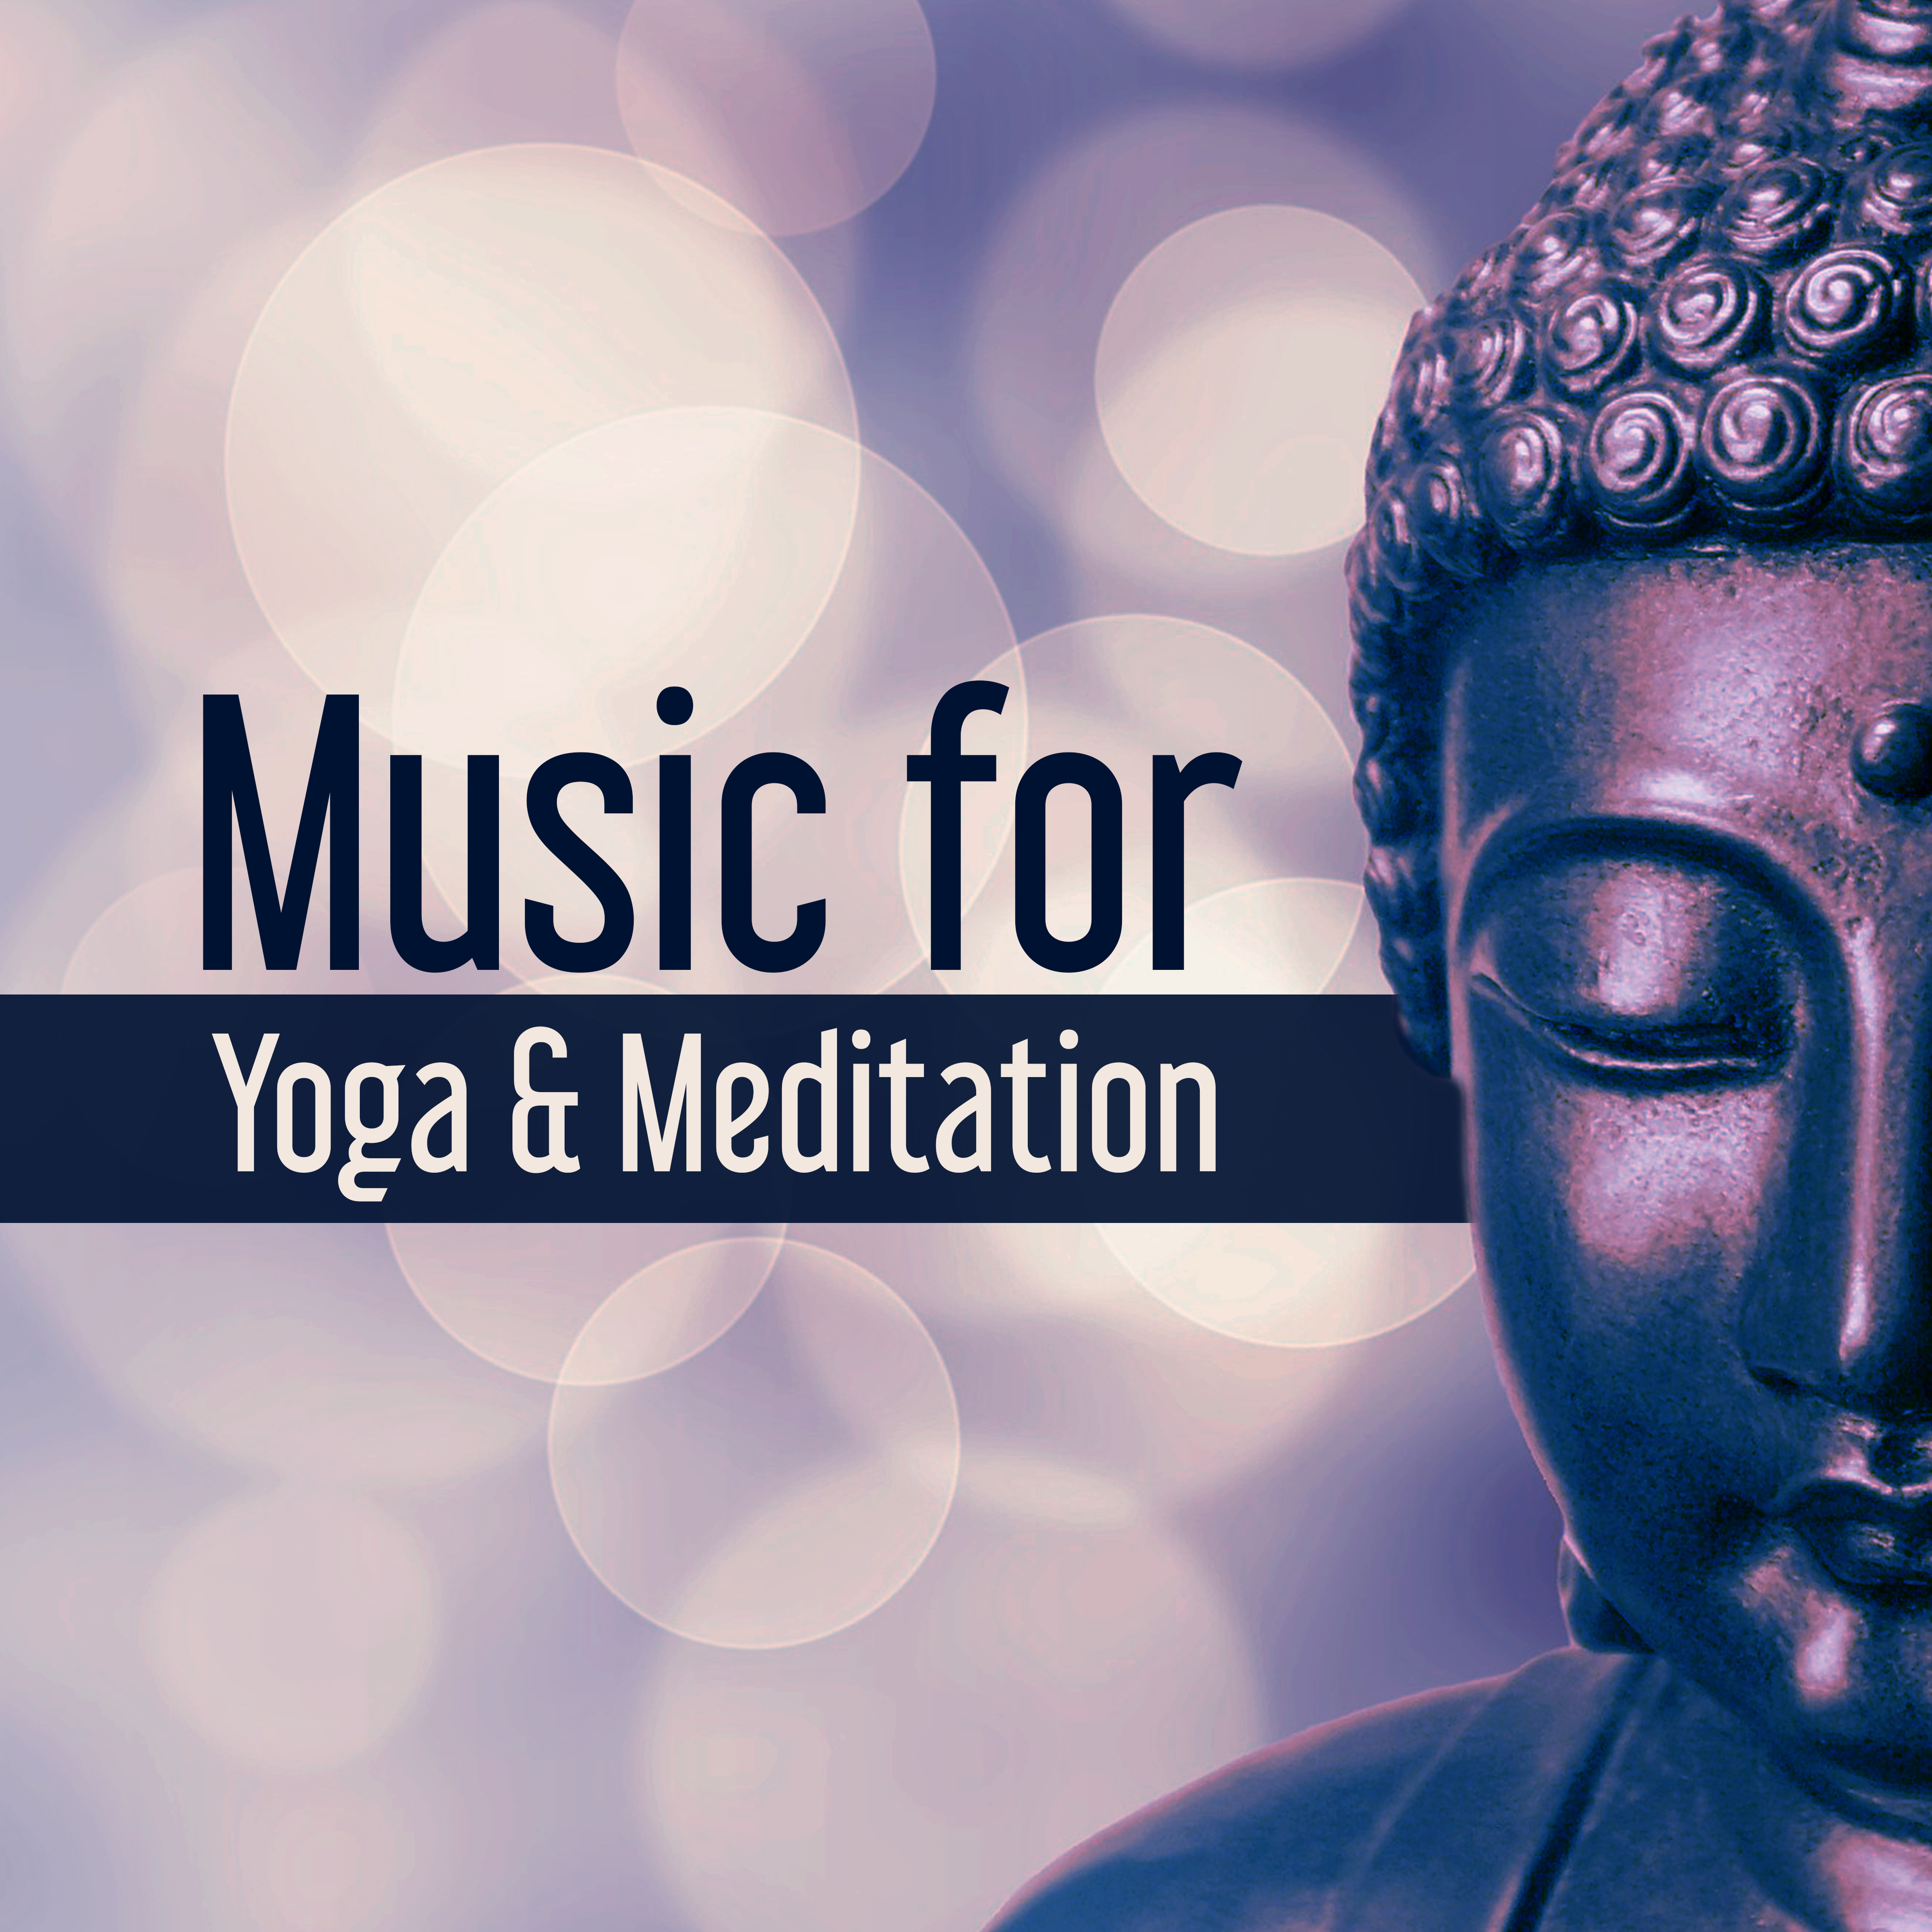 Music for Yoga & Meditation – Sounds for Yoga Training, Rest & Relax, Meditation Awareness, New Age Calmness